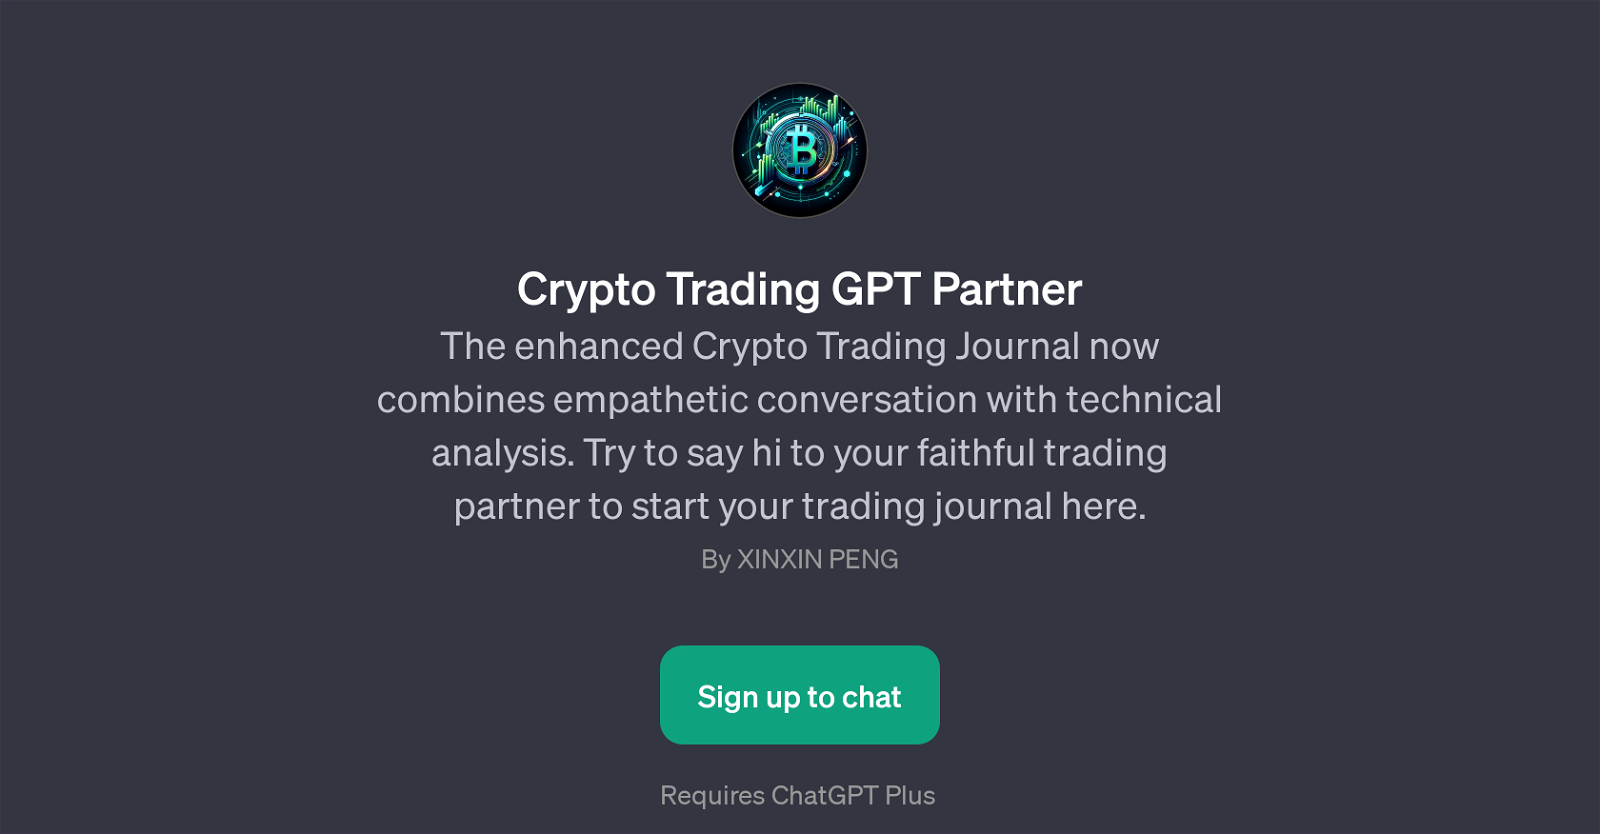 Crypto Trading GPT Partner website